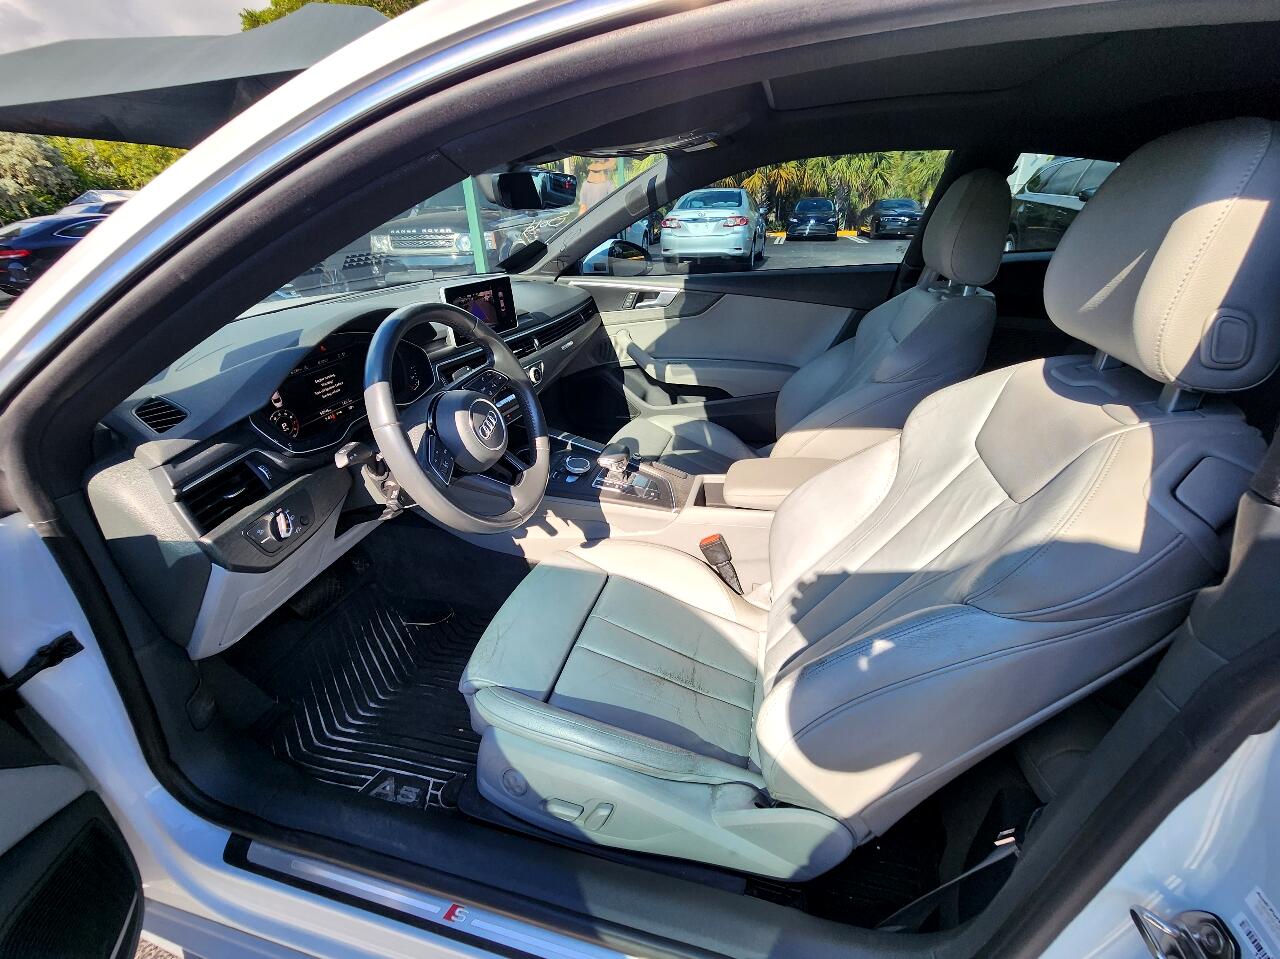 2018 AUDI A5 Coupe - $24,999